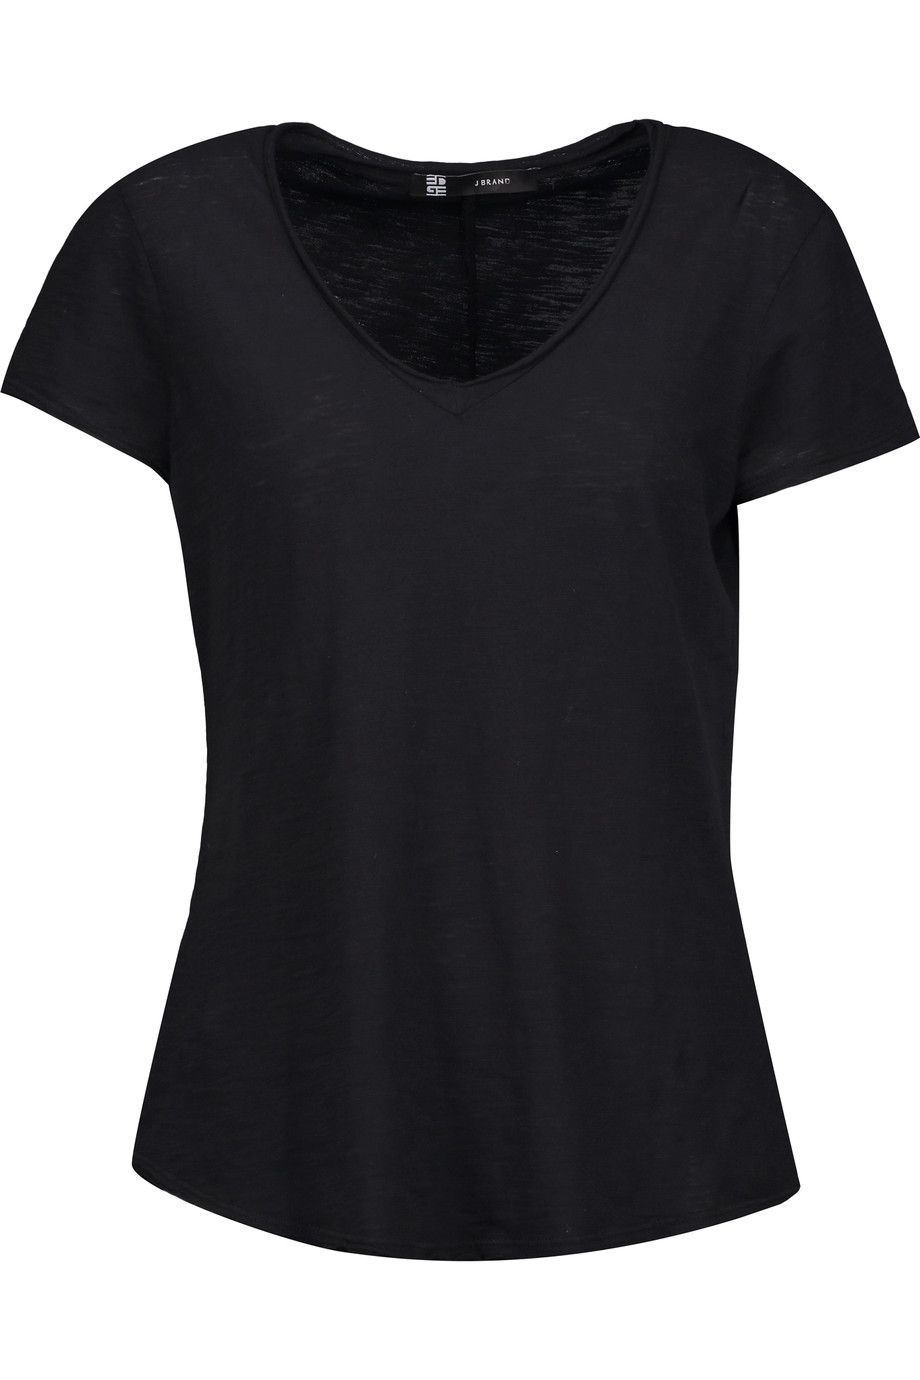 J Brand Mirabelle Slub Cotton T-shirt | ModeSens